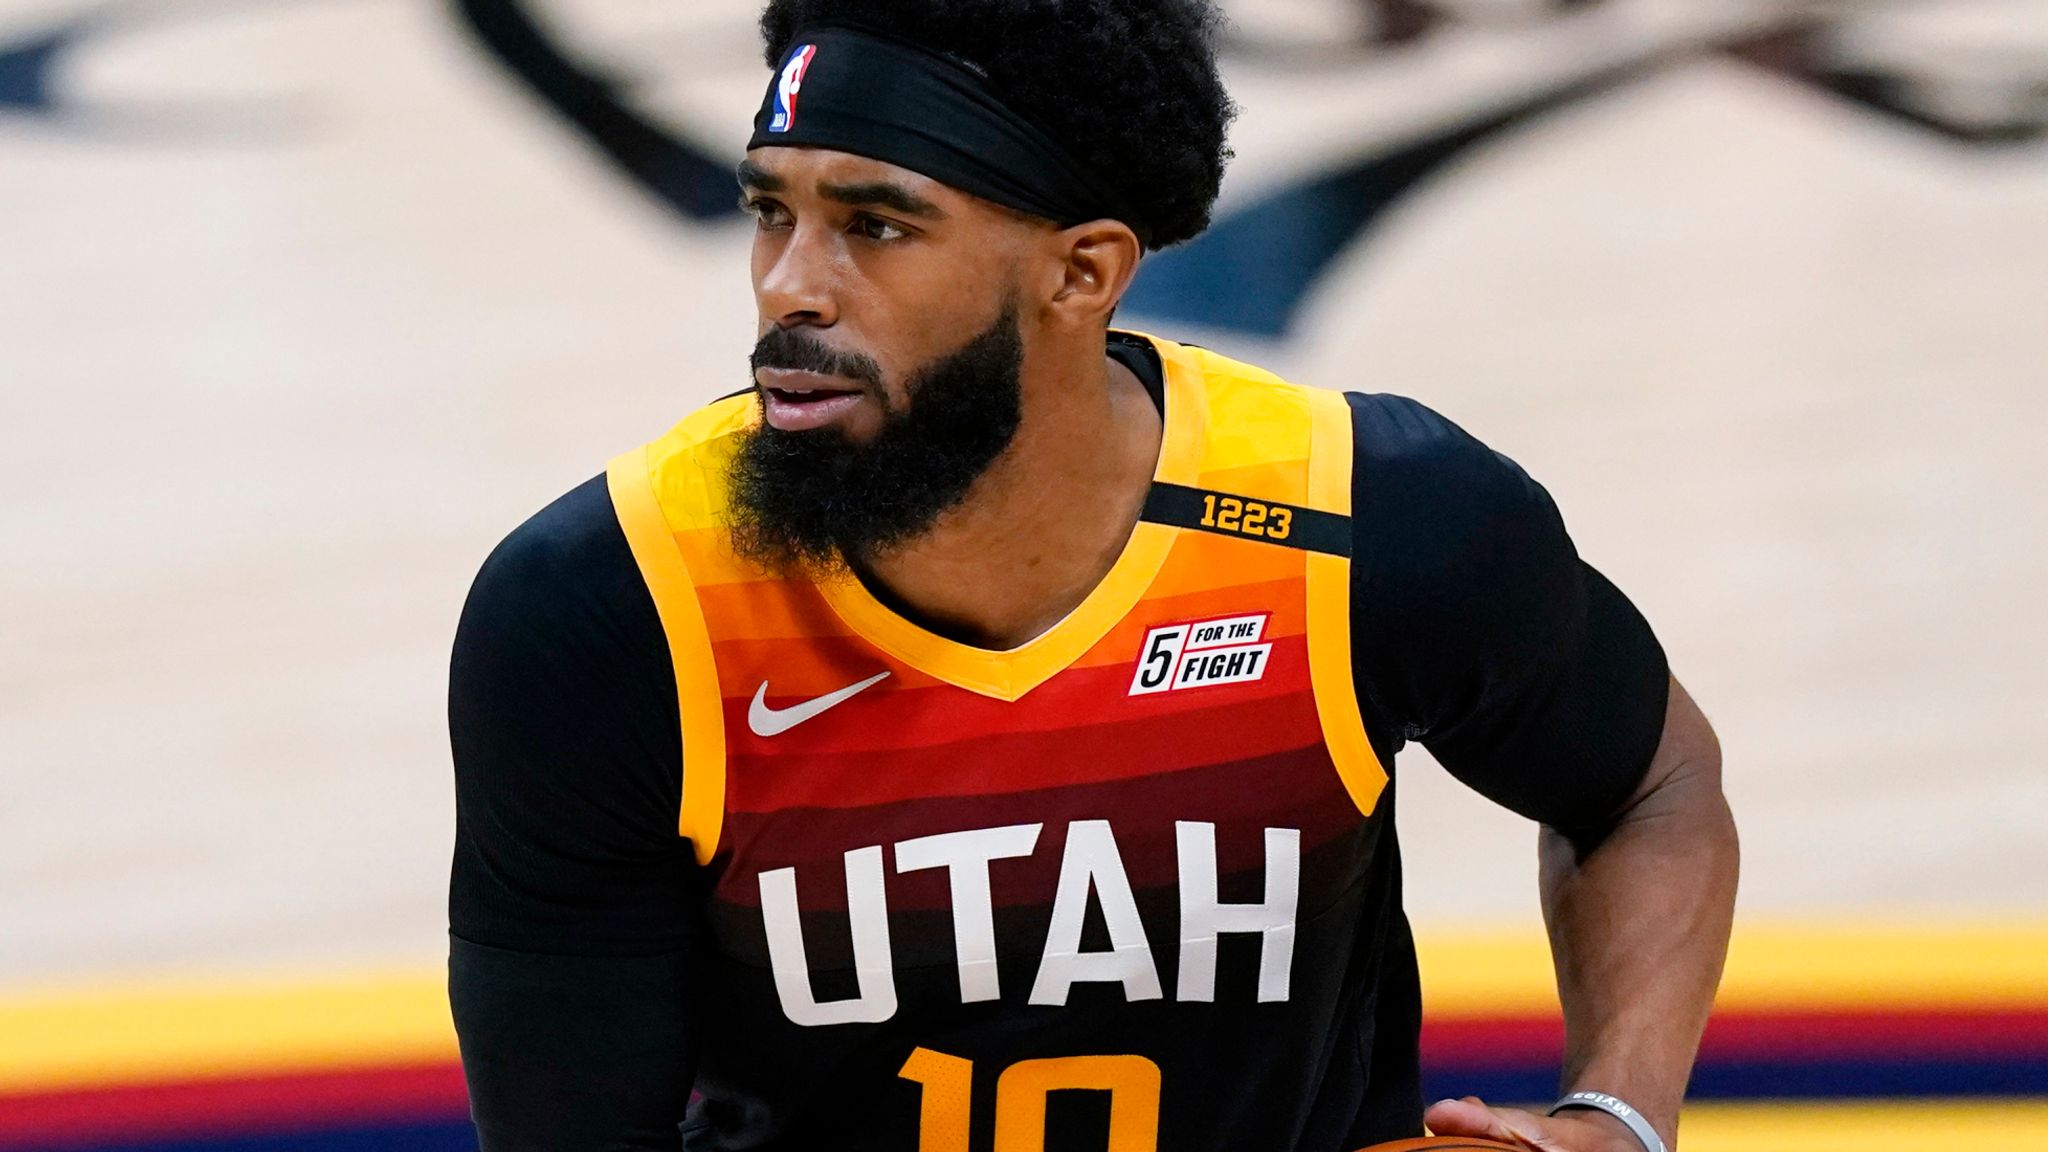 Utah Jazz to debut new uniforms for second half of season